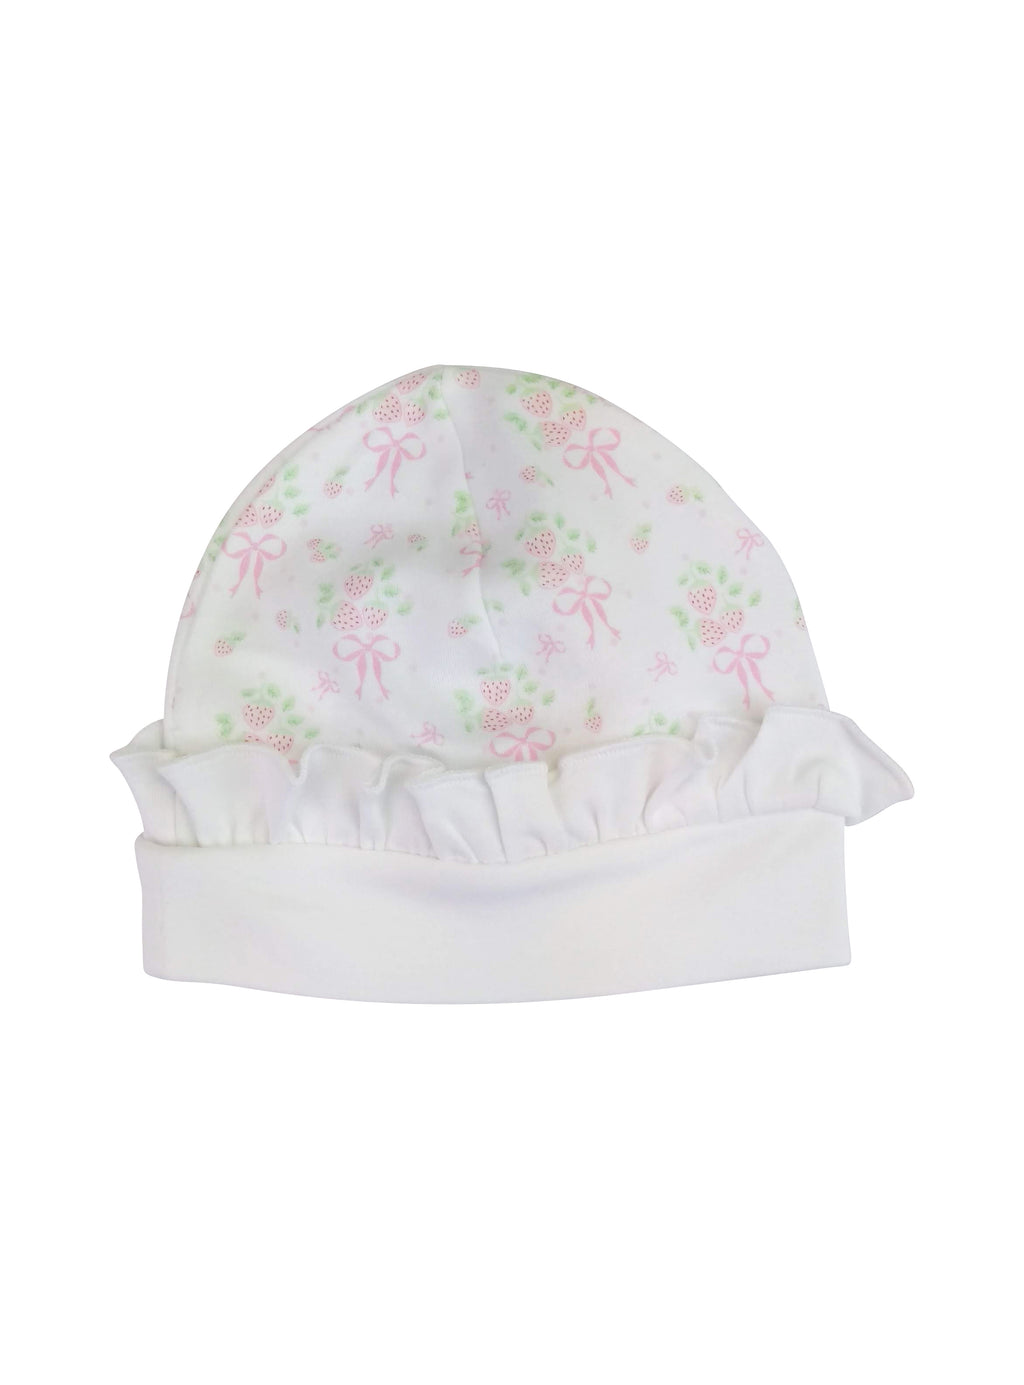 Strawberry Pima cotton hat - Little Threads Inc. Children's Clothing